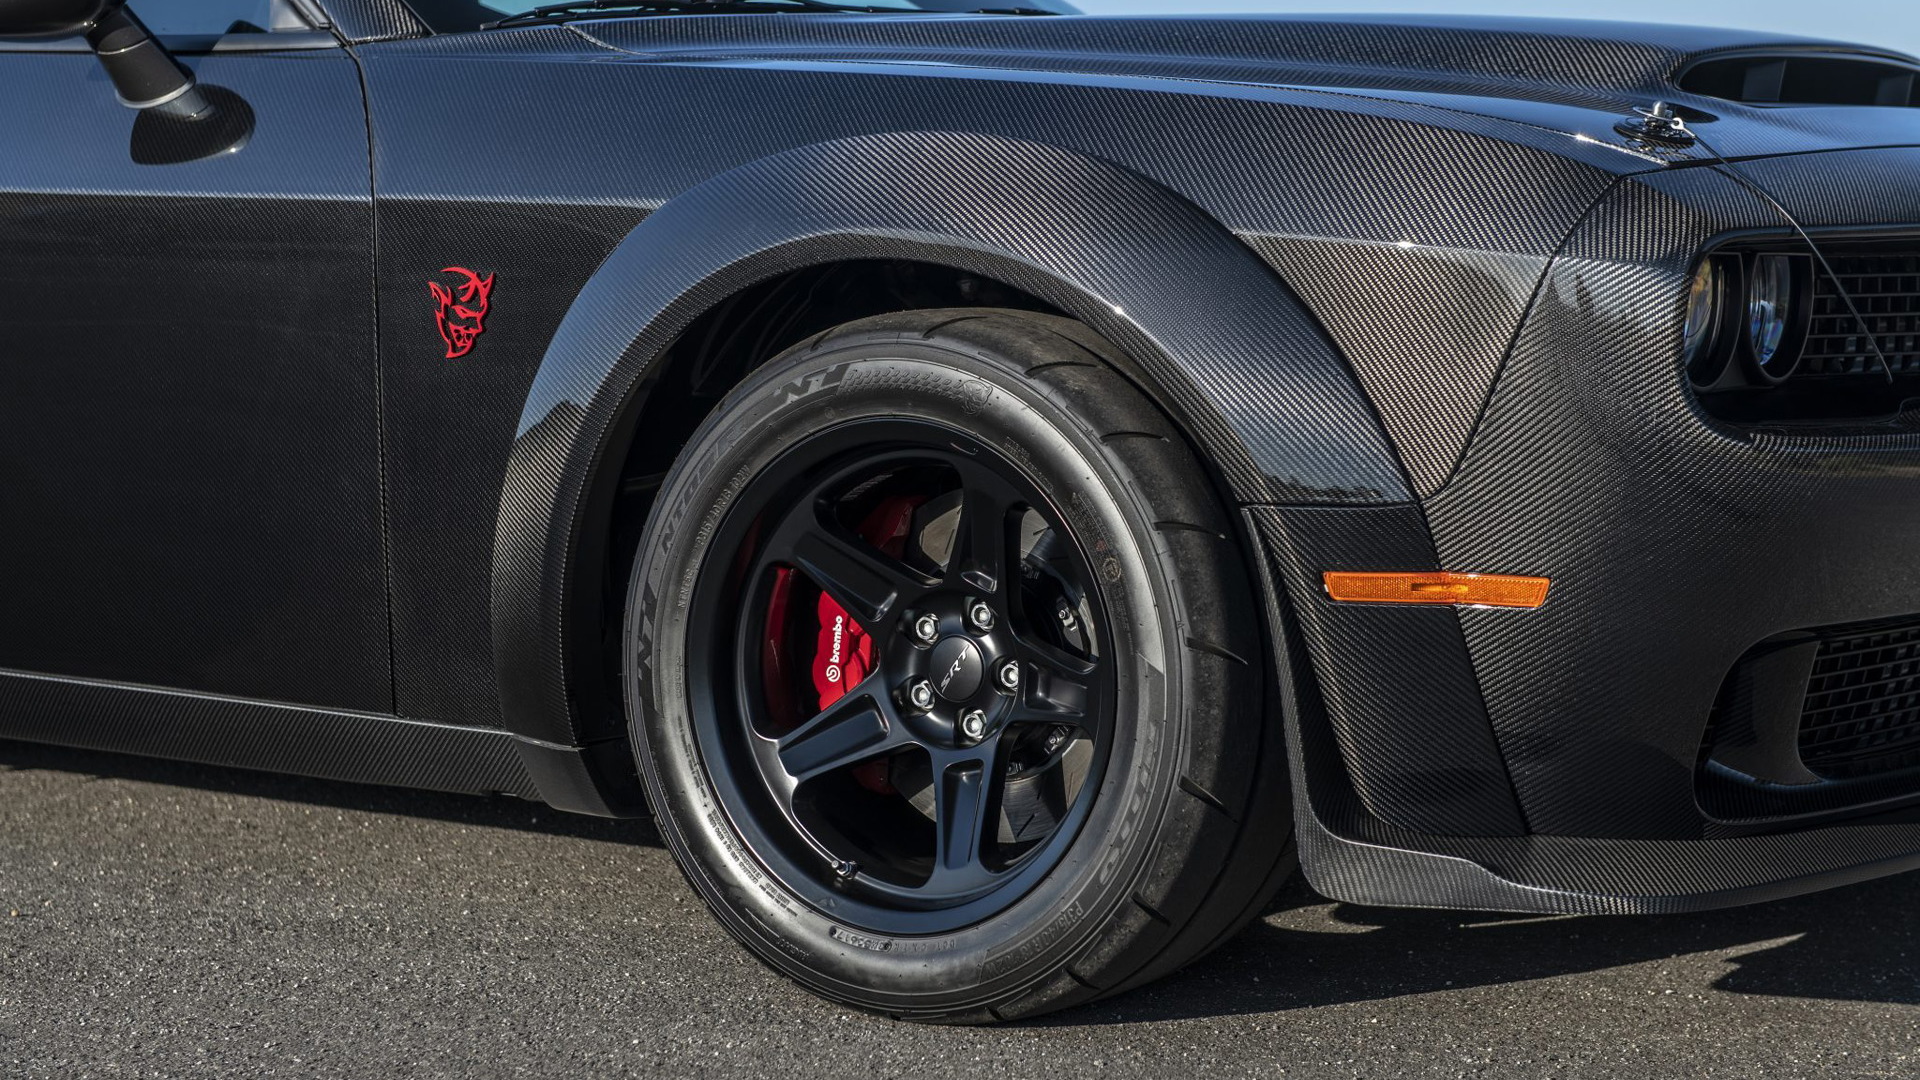 2018 Dodge Challenger SRT Demon with carbon-fiber body by SpeedKore - Photo credit: Bring a Trailer